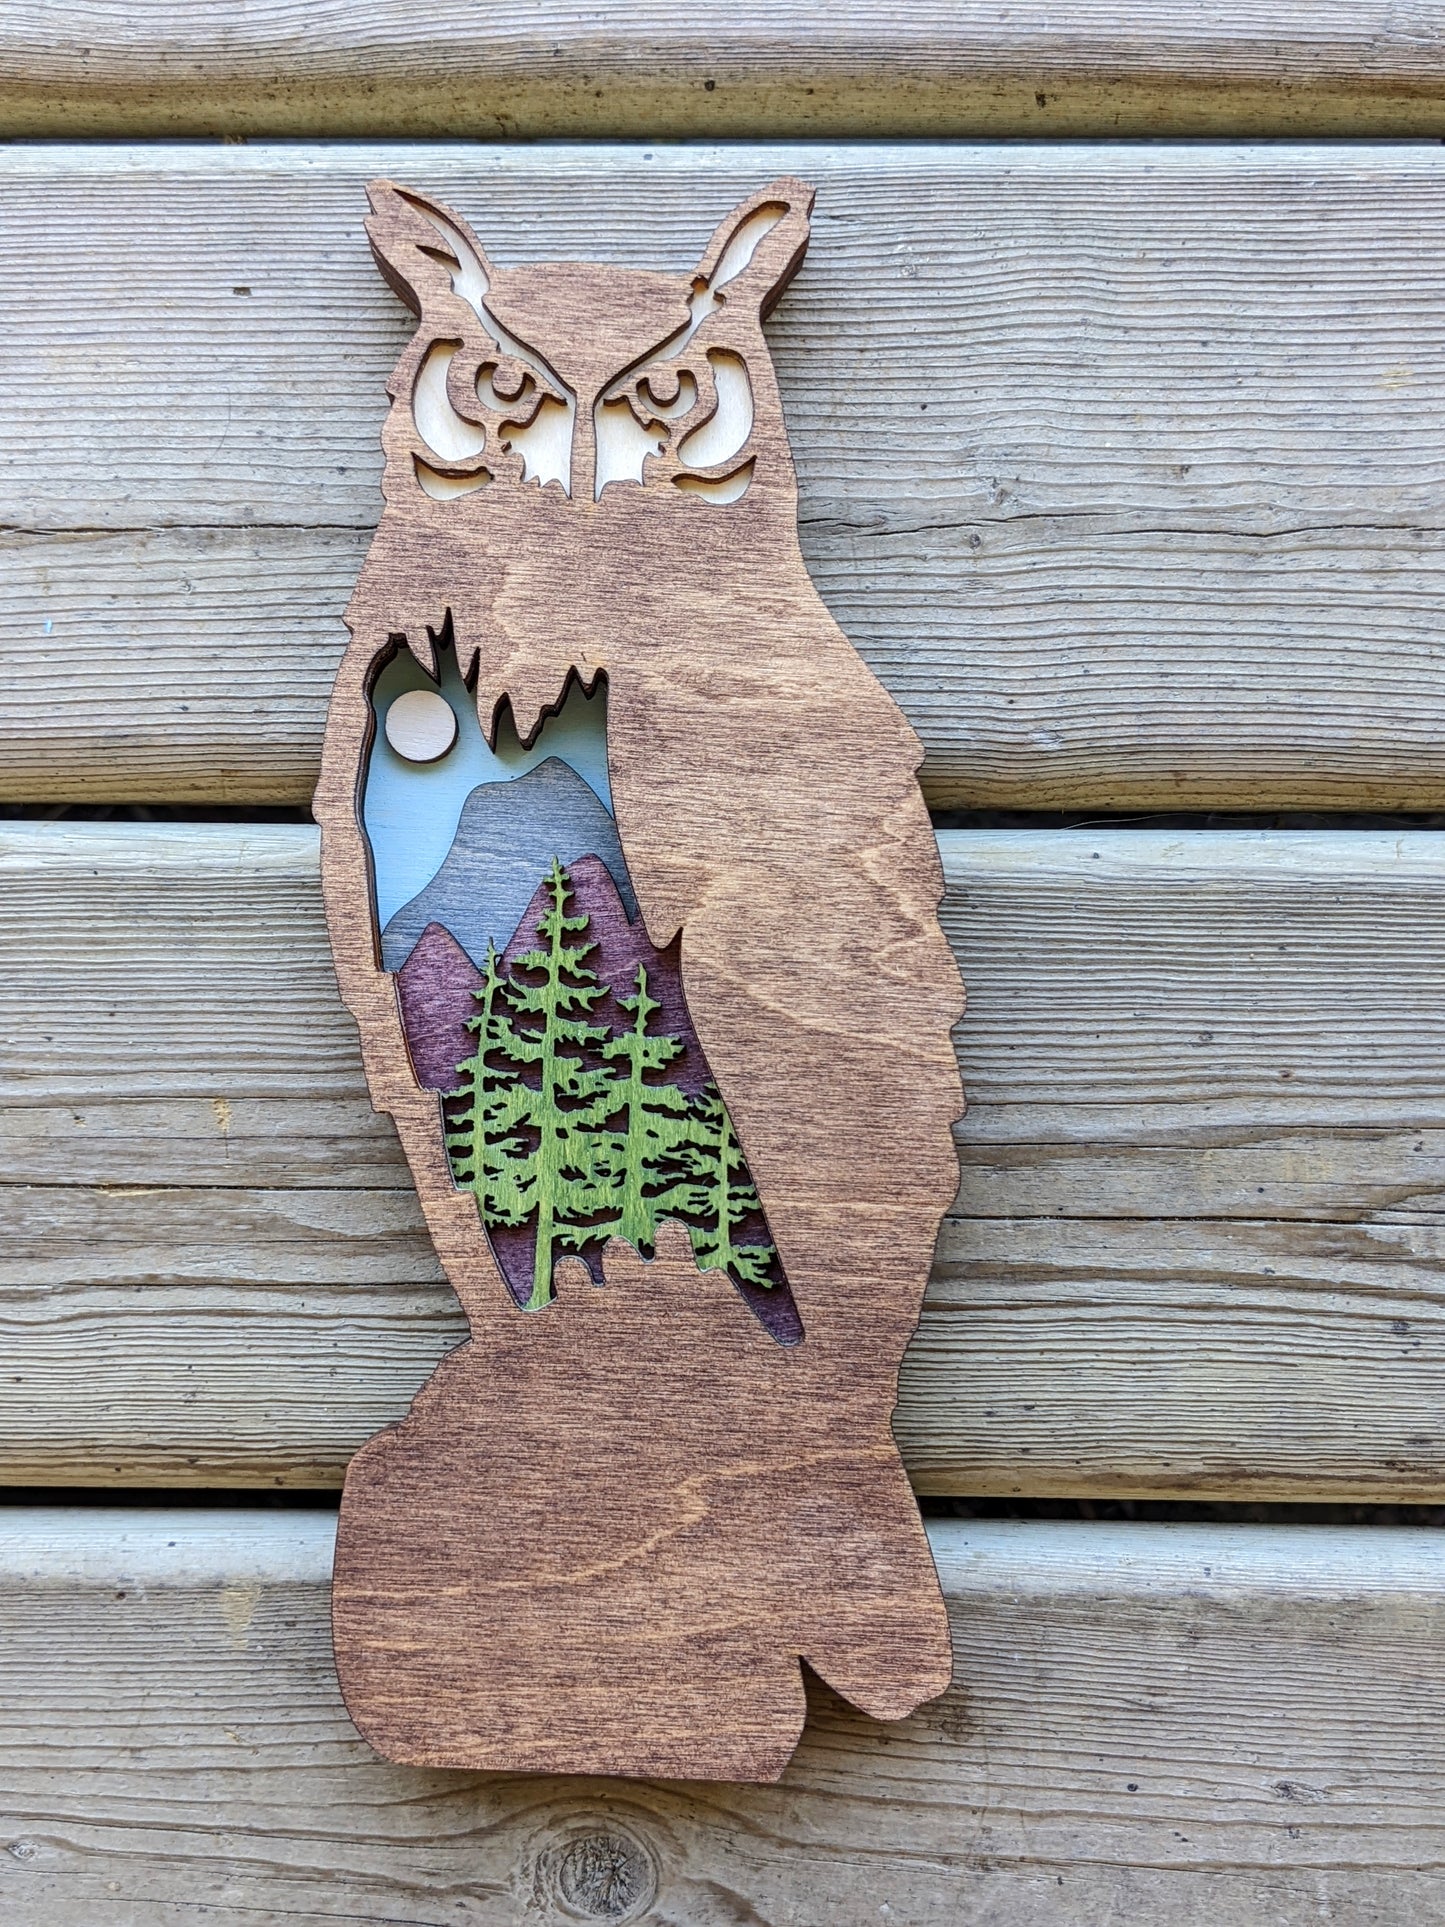 3D Layered Wooden Owl Art / Owl shaped layered mountain scene Artwork 50.00